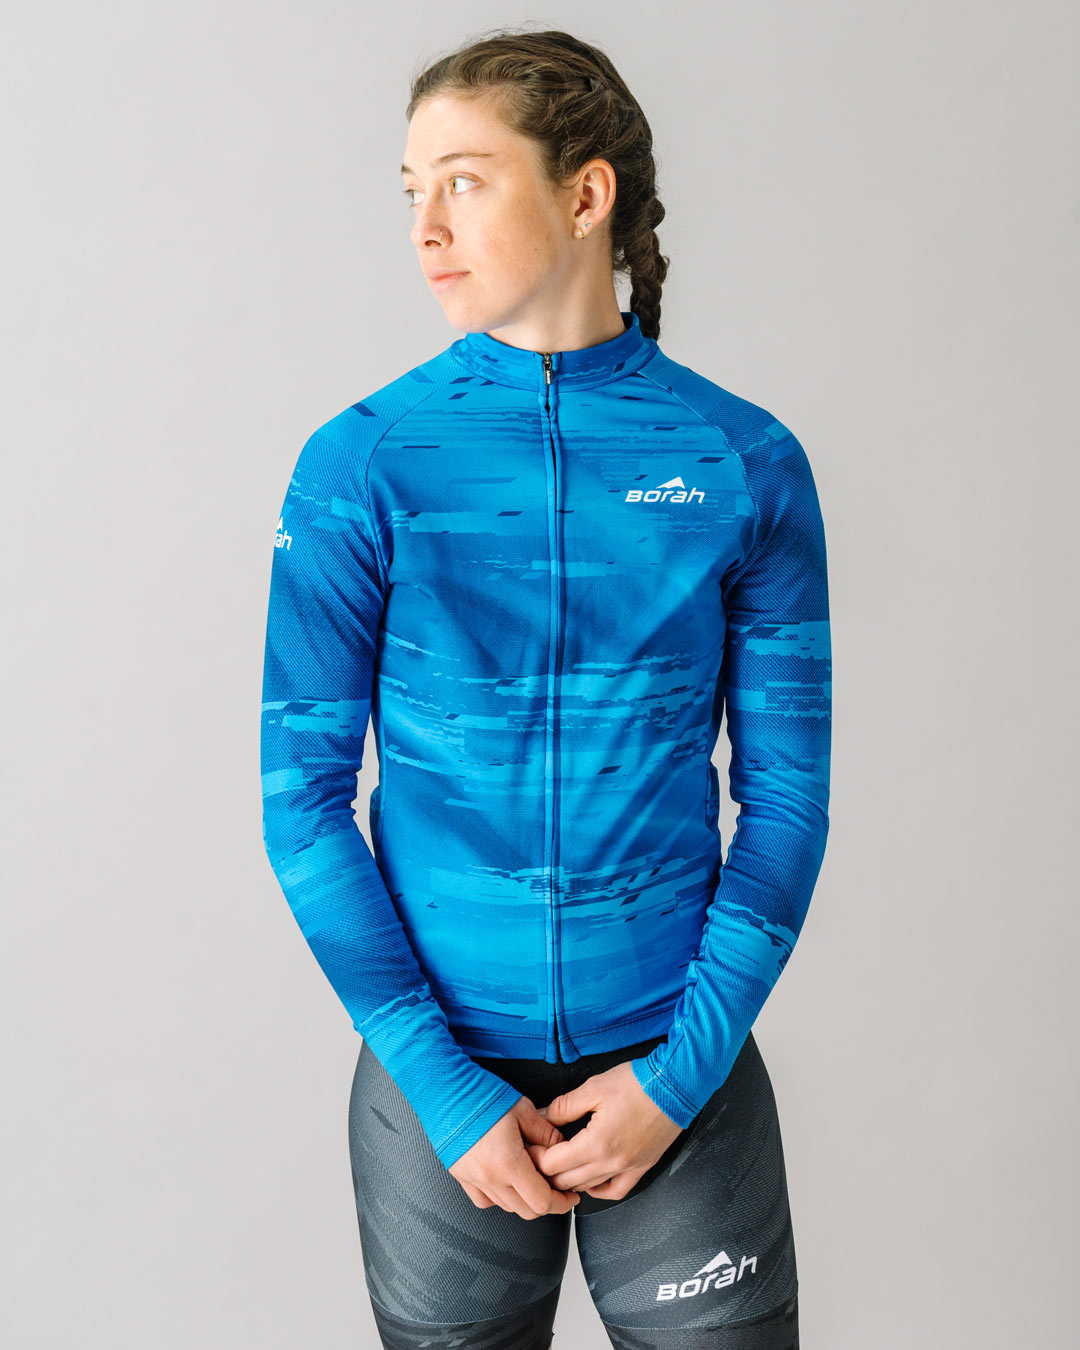 Women's Team Long Sleeve Cycling Jersey | Made in USA | Borah Teamwear